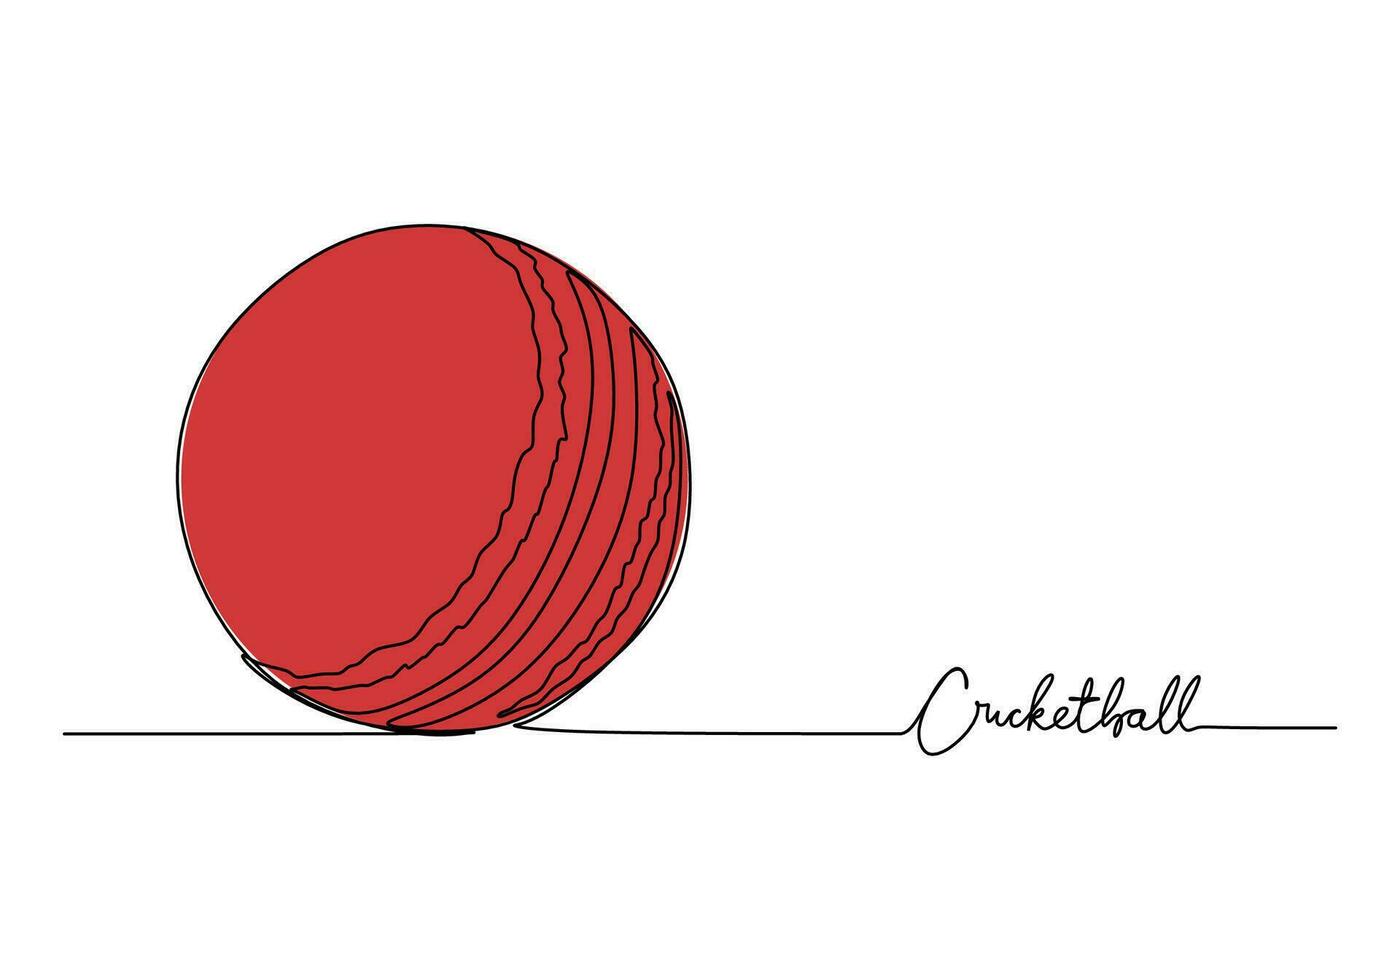 Grillo pelota uno línea dibujo continuo mano dibujado deporte tema objeto vector